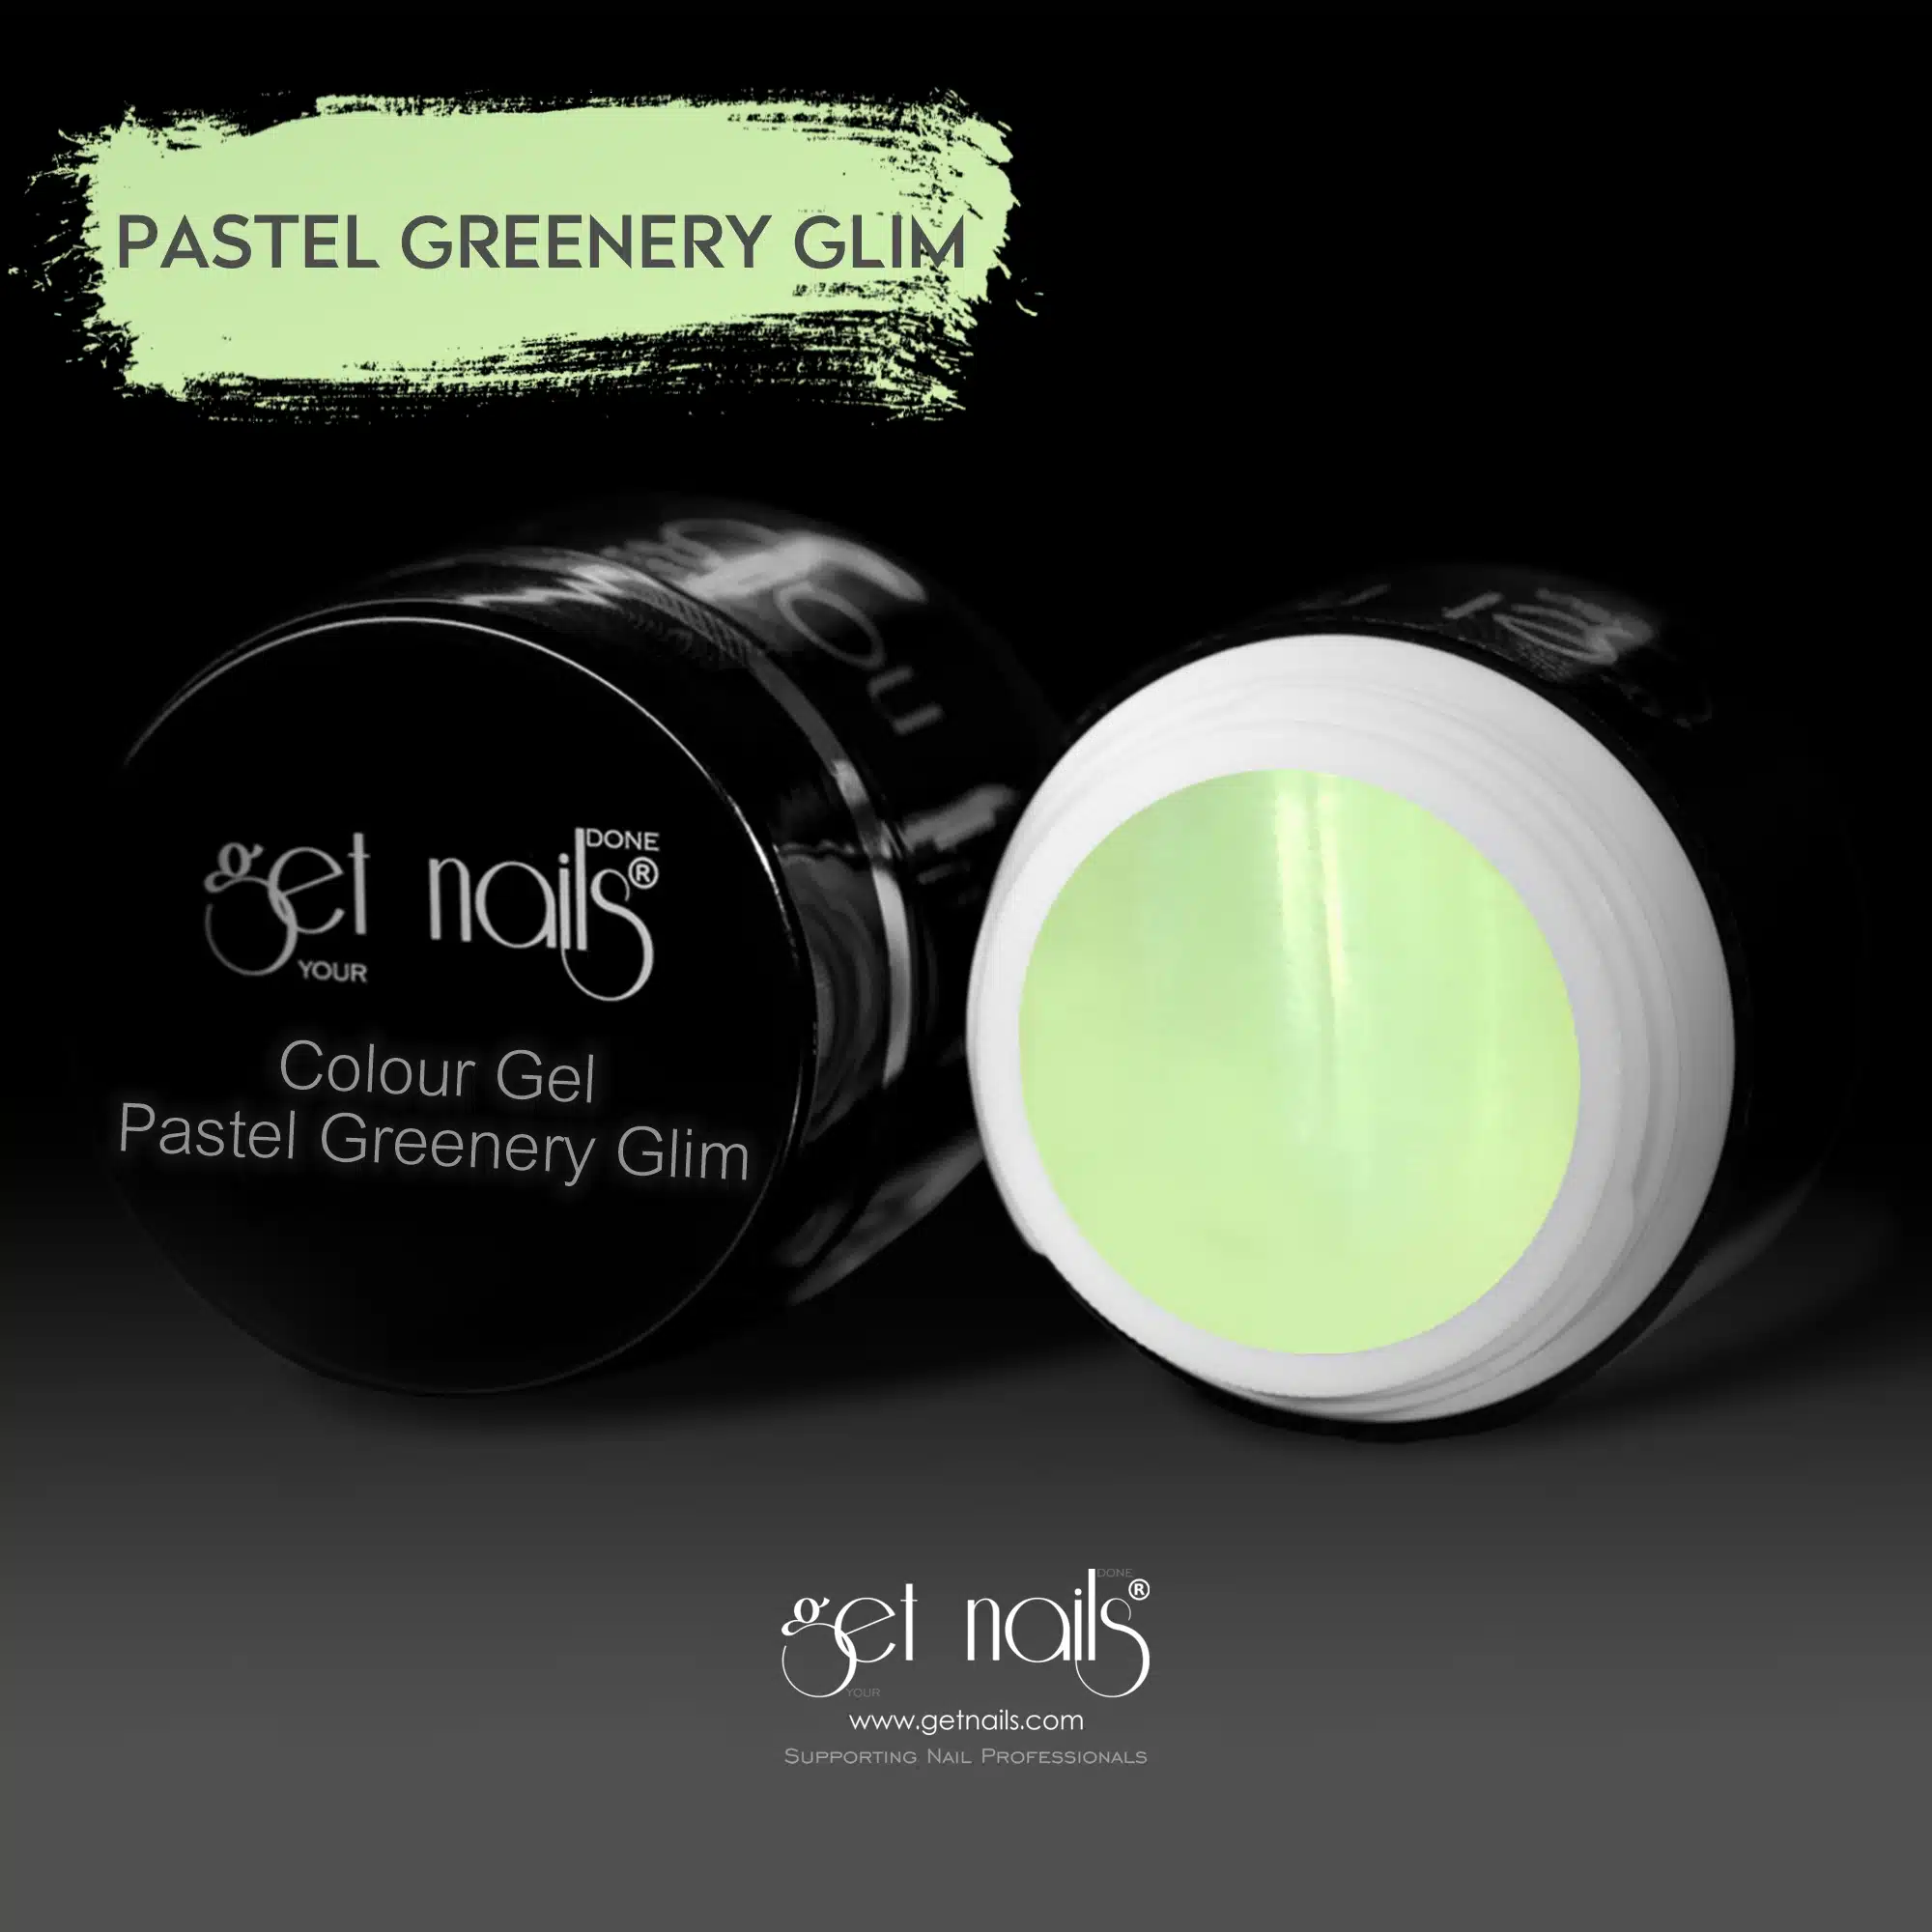 Get Nails Austria - Colour Gel Pastel Greenery Glim 5g